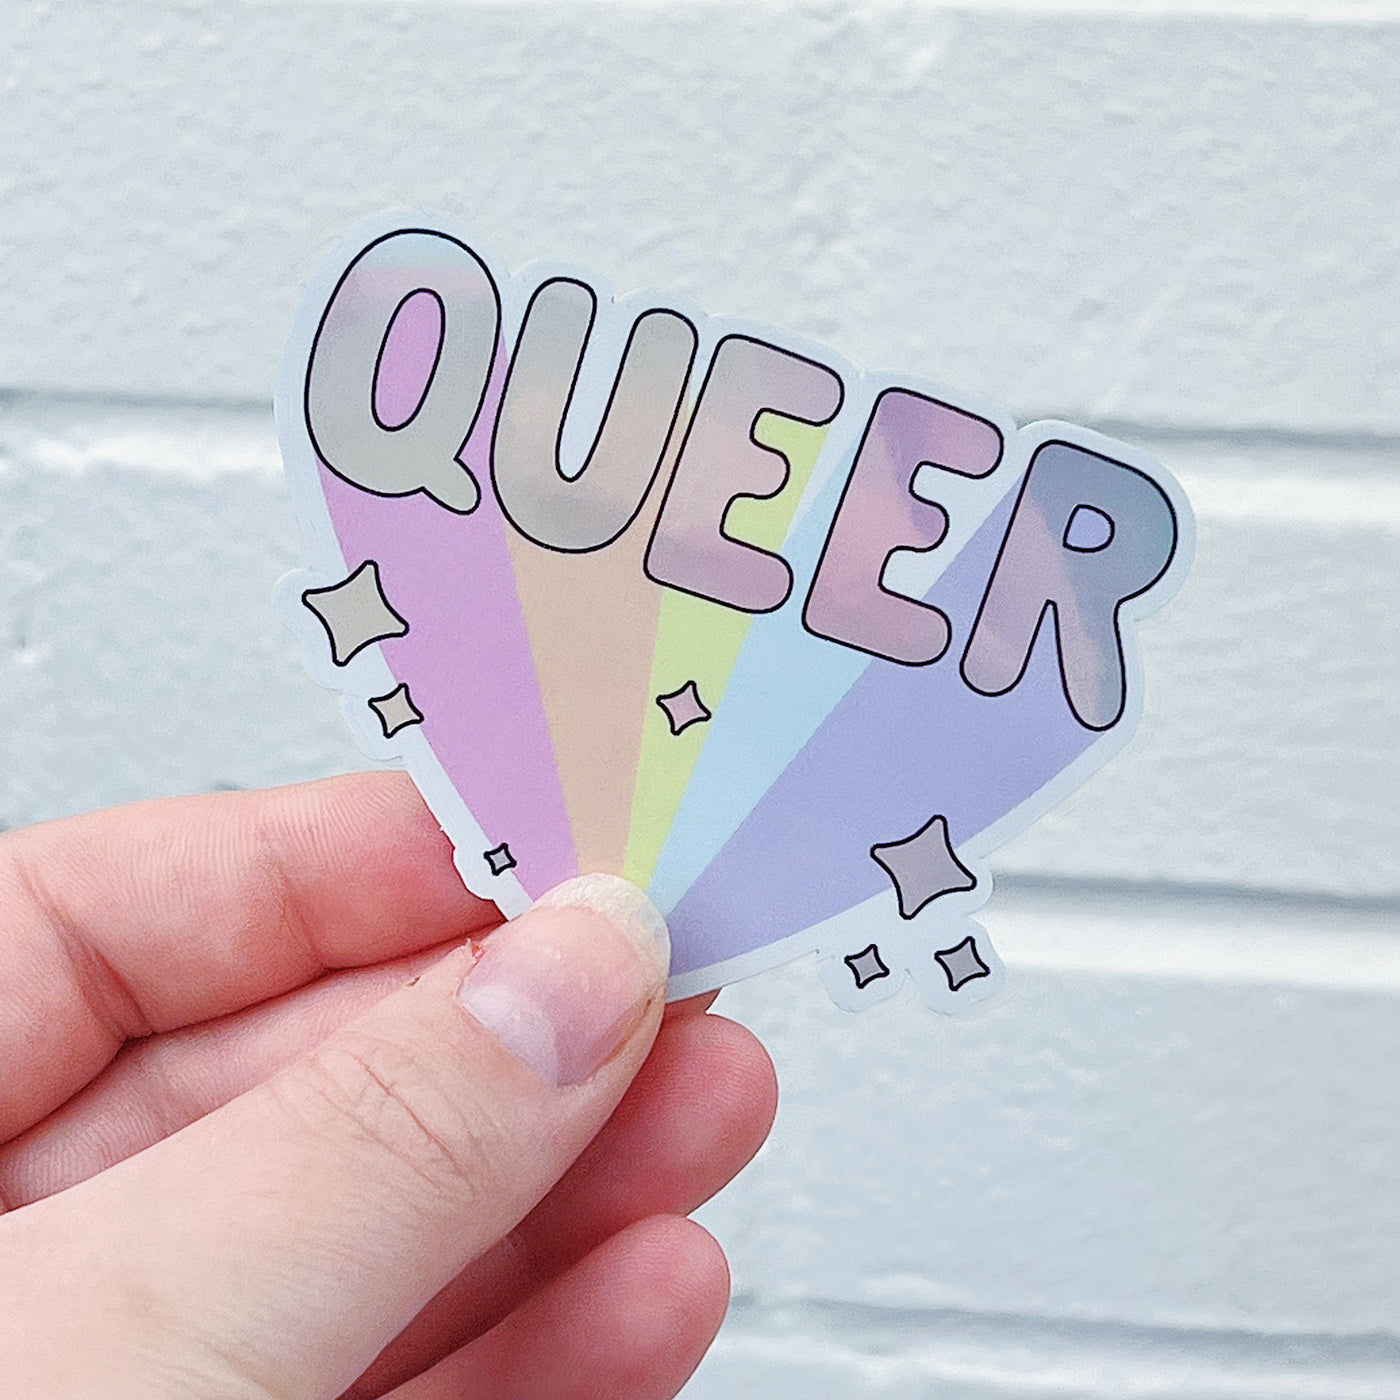 Queer Vinyl Sticker Die Cut | Holographic Foil